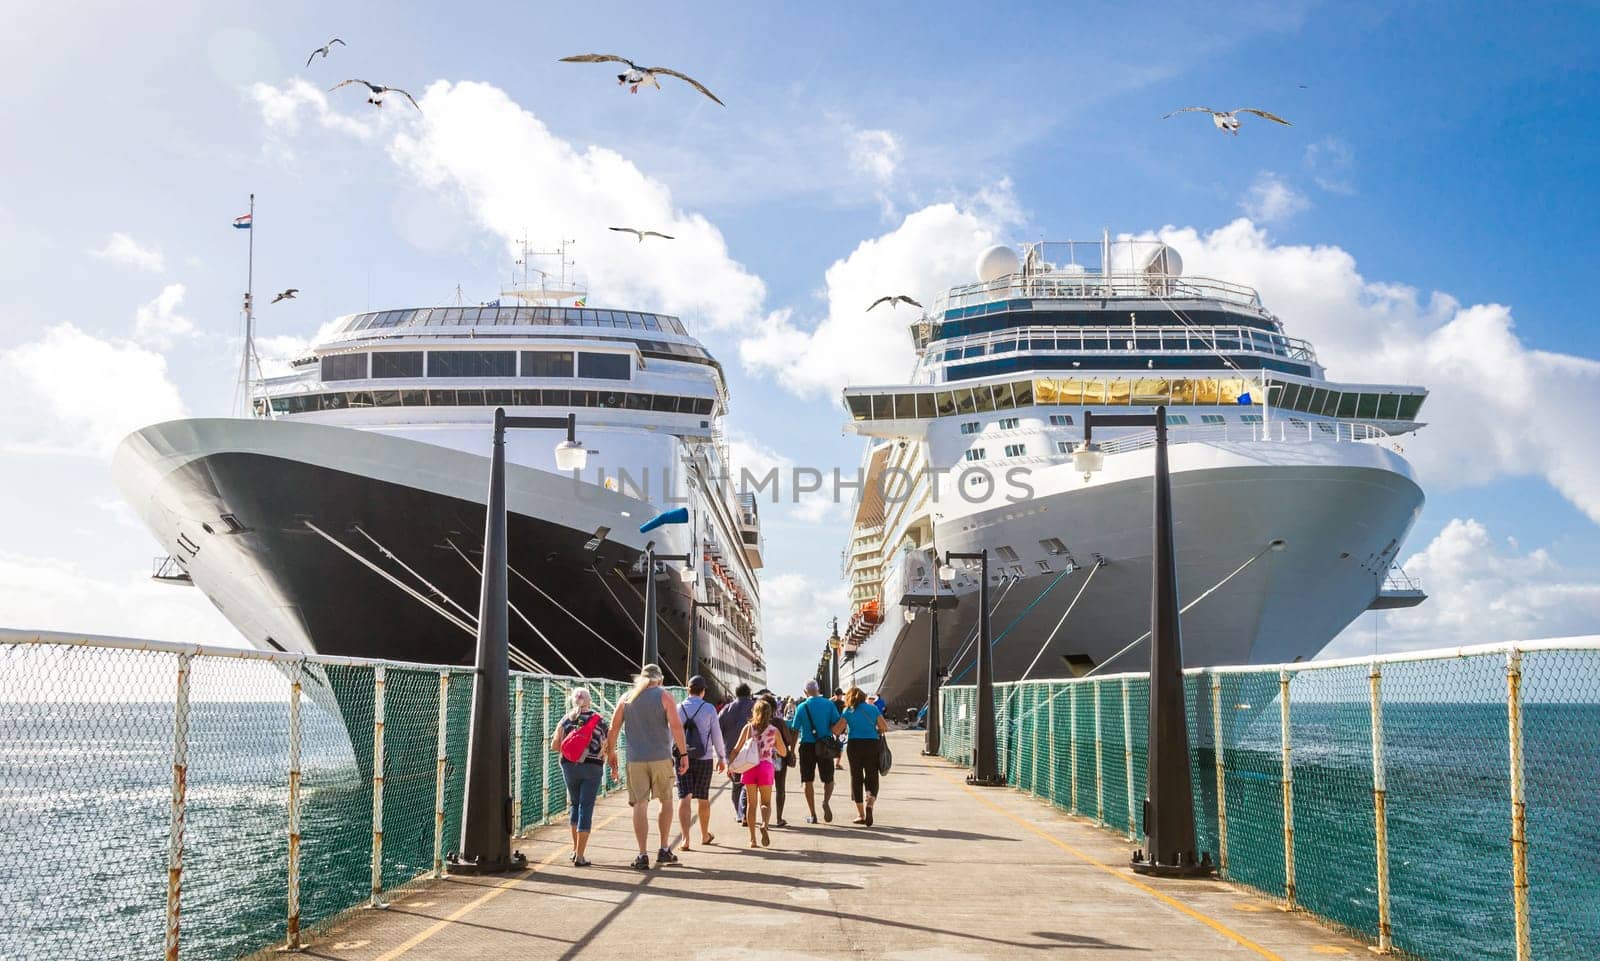 Cruise passengers return to cruise ships at St Kitts Port Zante cruise ship terminal by Mariakray